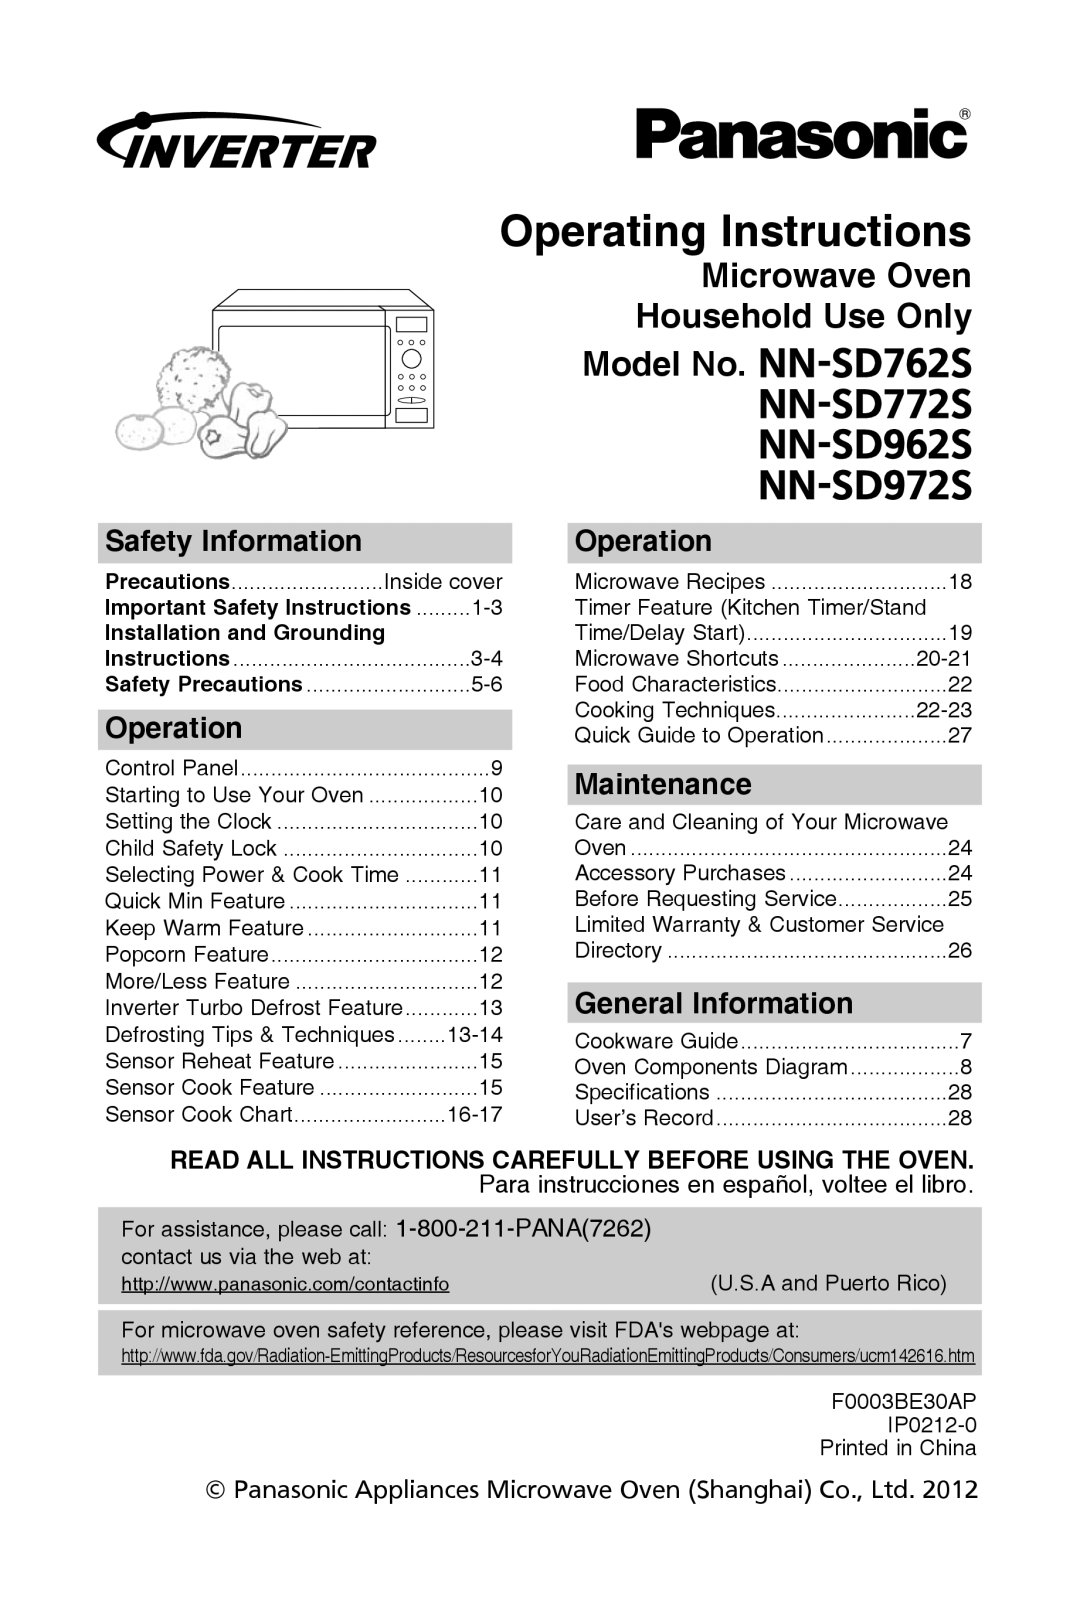 Panasonic warranty operating instructions, Model no. NN-SD762S NN-SD772S NN-SD962S NN-SD972S, safety information 